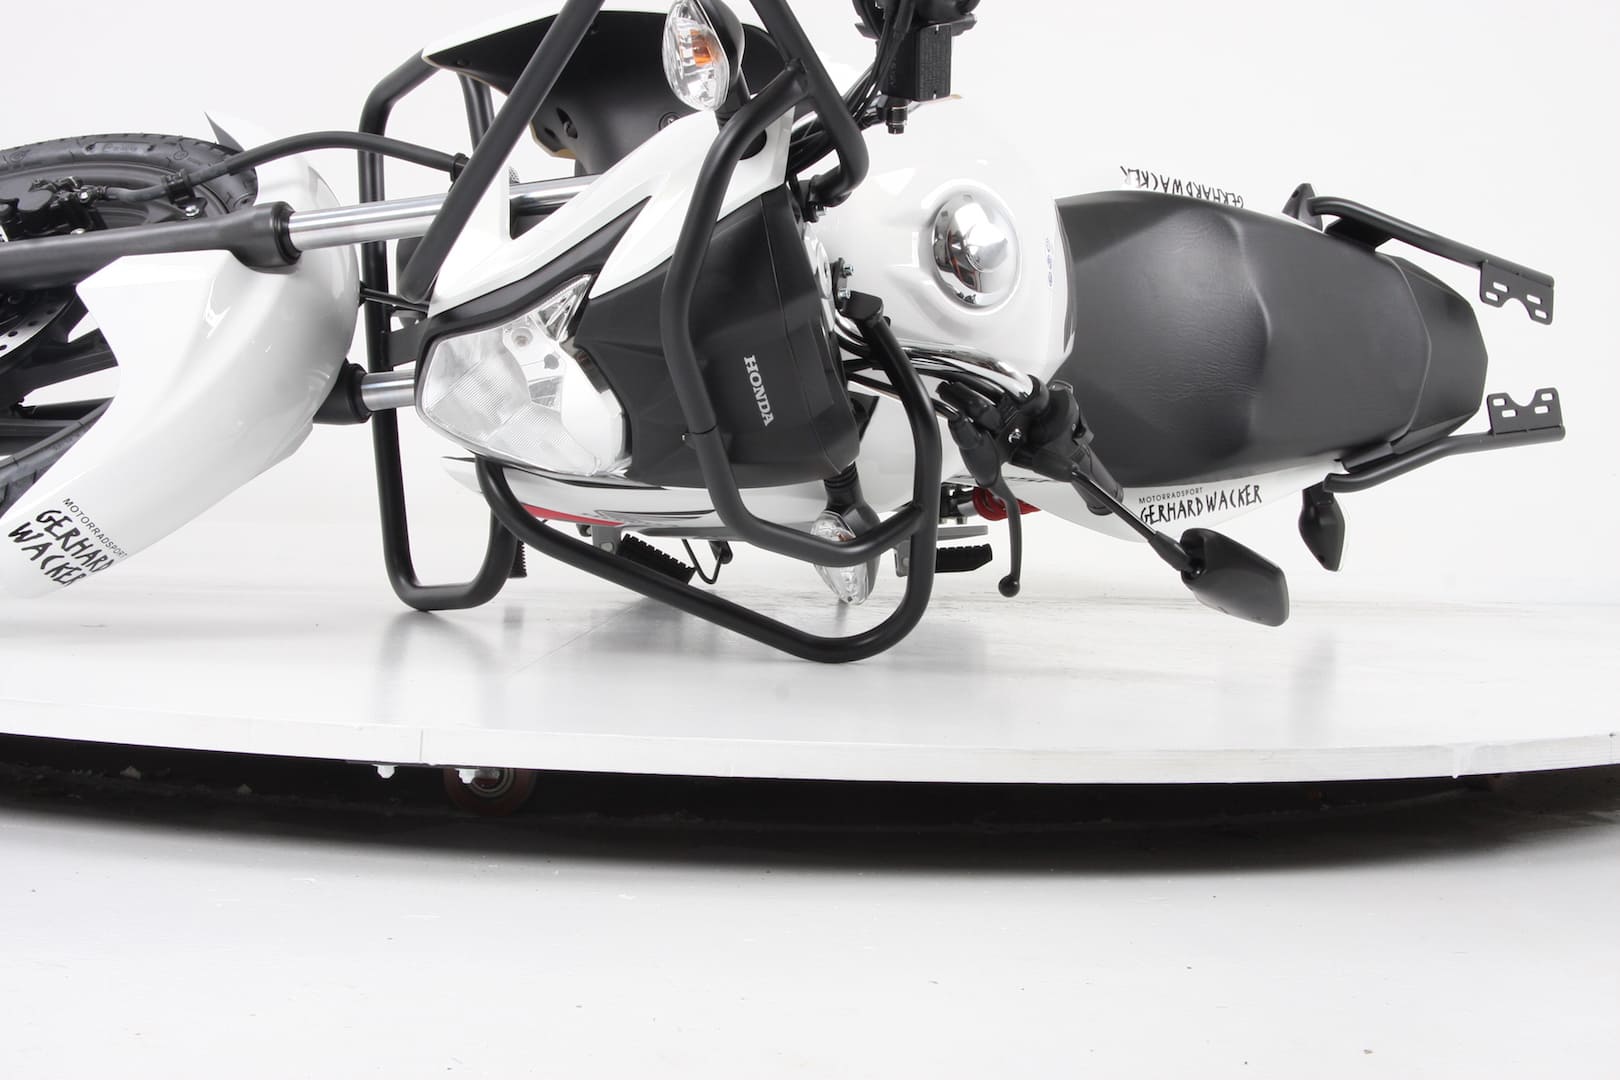 Front protection bar - black for Honda CB 125 F (2015-2020)